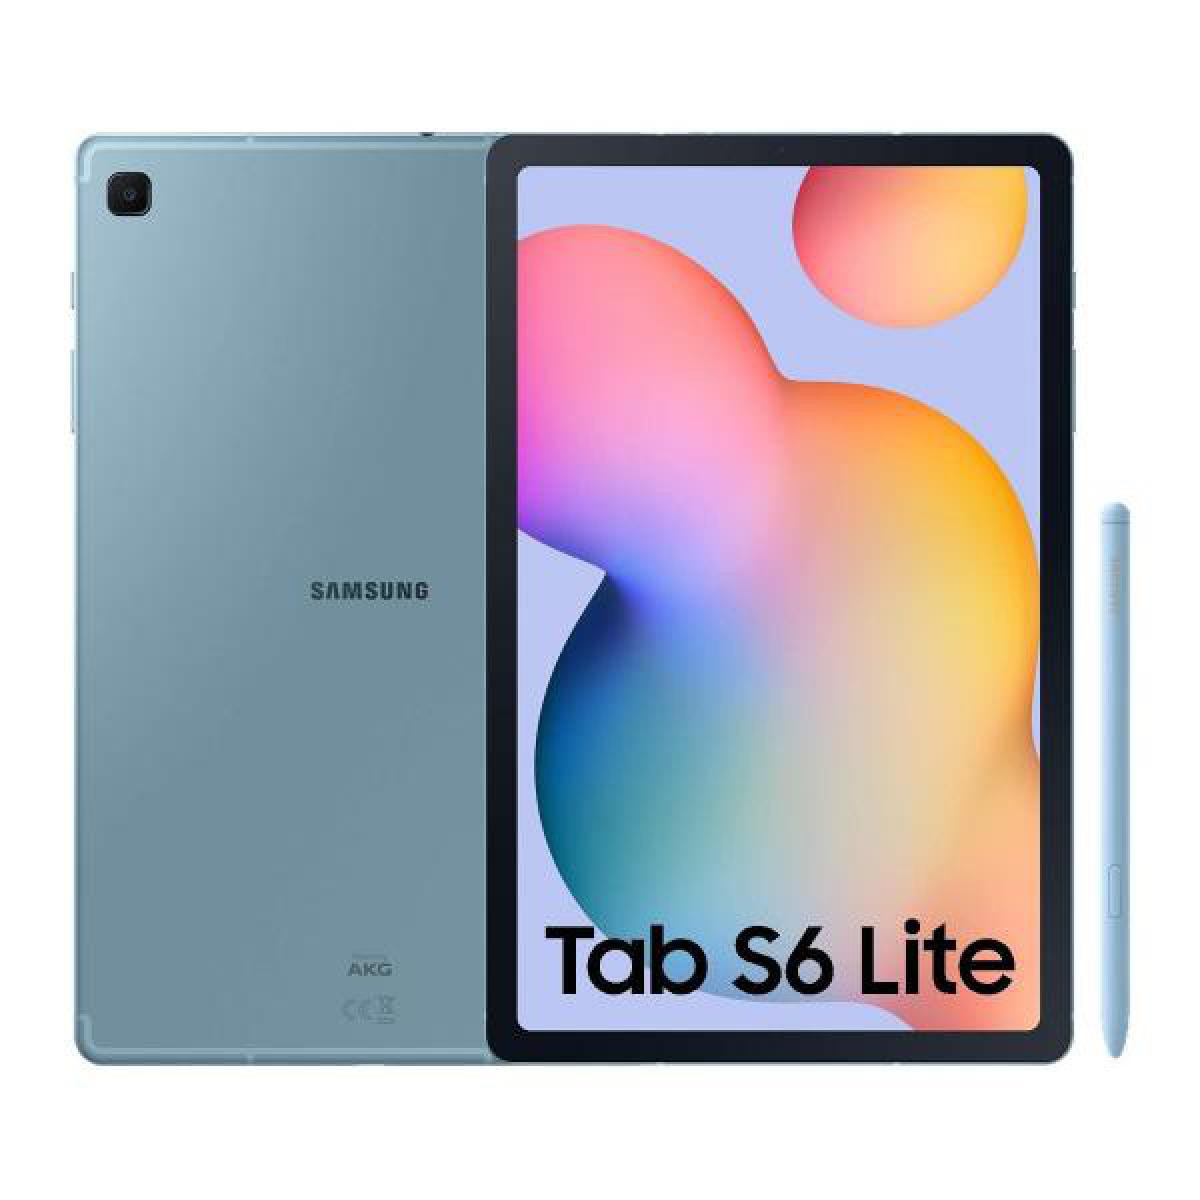 Samsung - Samsung Sm-p610 Tab S6 Lite Blue Con S Pen Tablet Wifi 10.4'' Wuxga+/8core/64gb/4gb Ram/8mp/5mp - Bracelet connecté